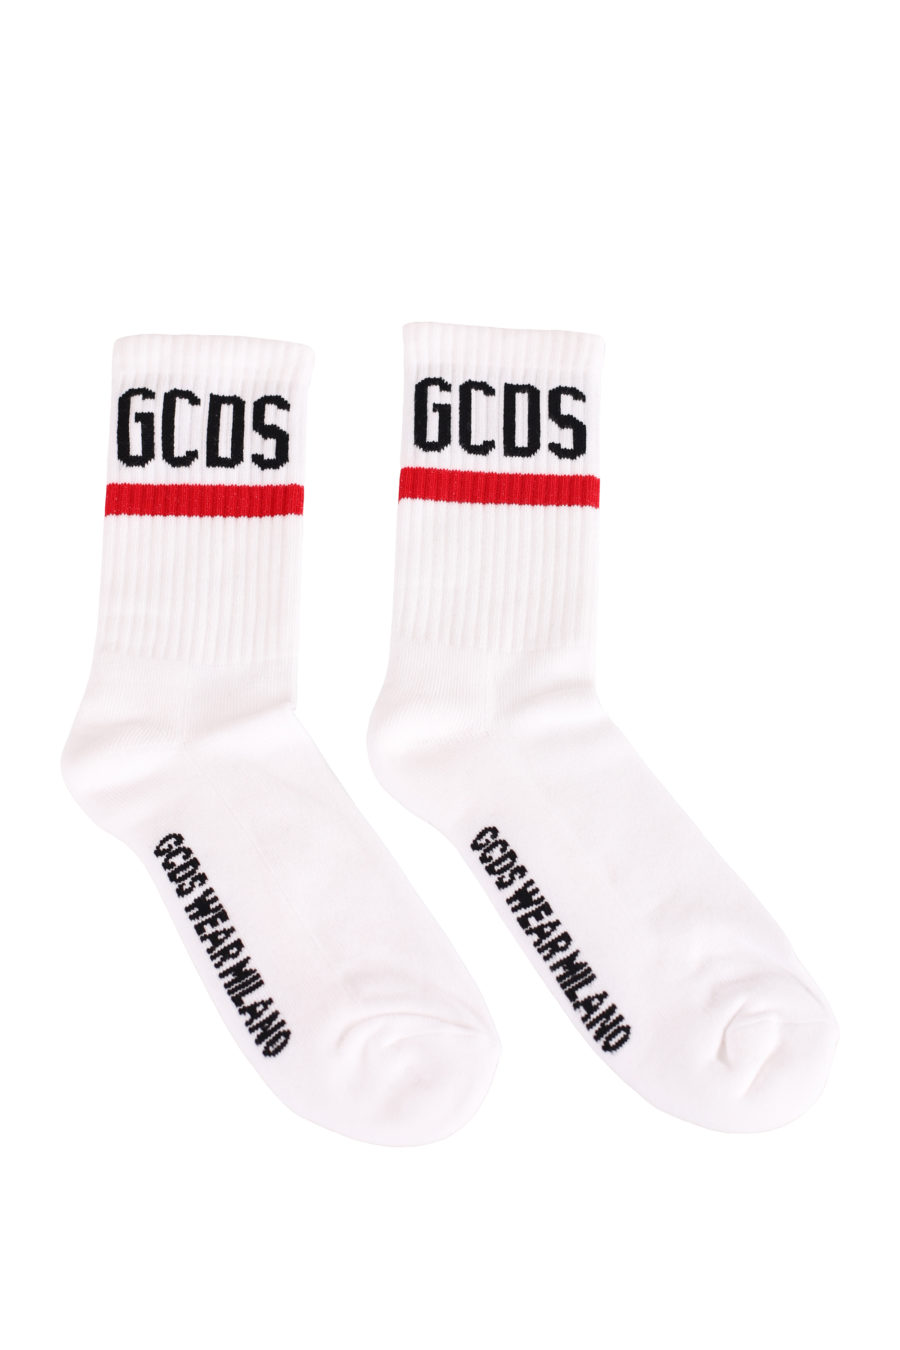 White high socks with black logo - 190cc763c6ae438d51c2c28f4b0036fc13ba7704